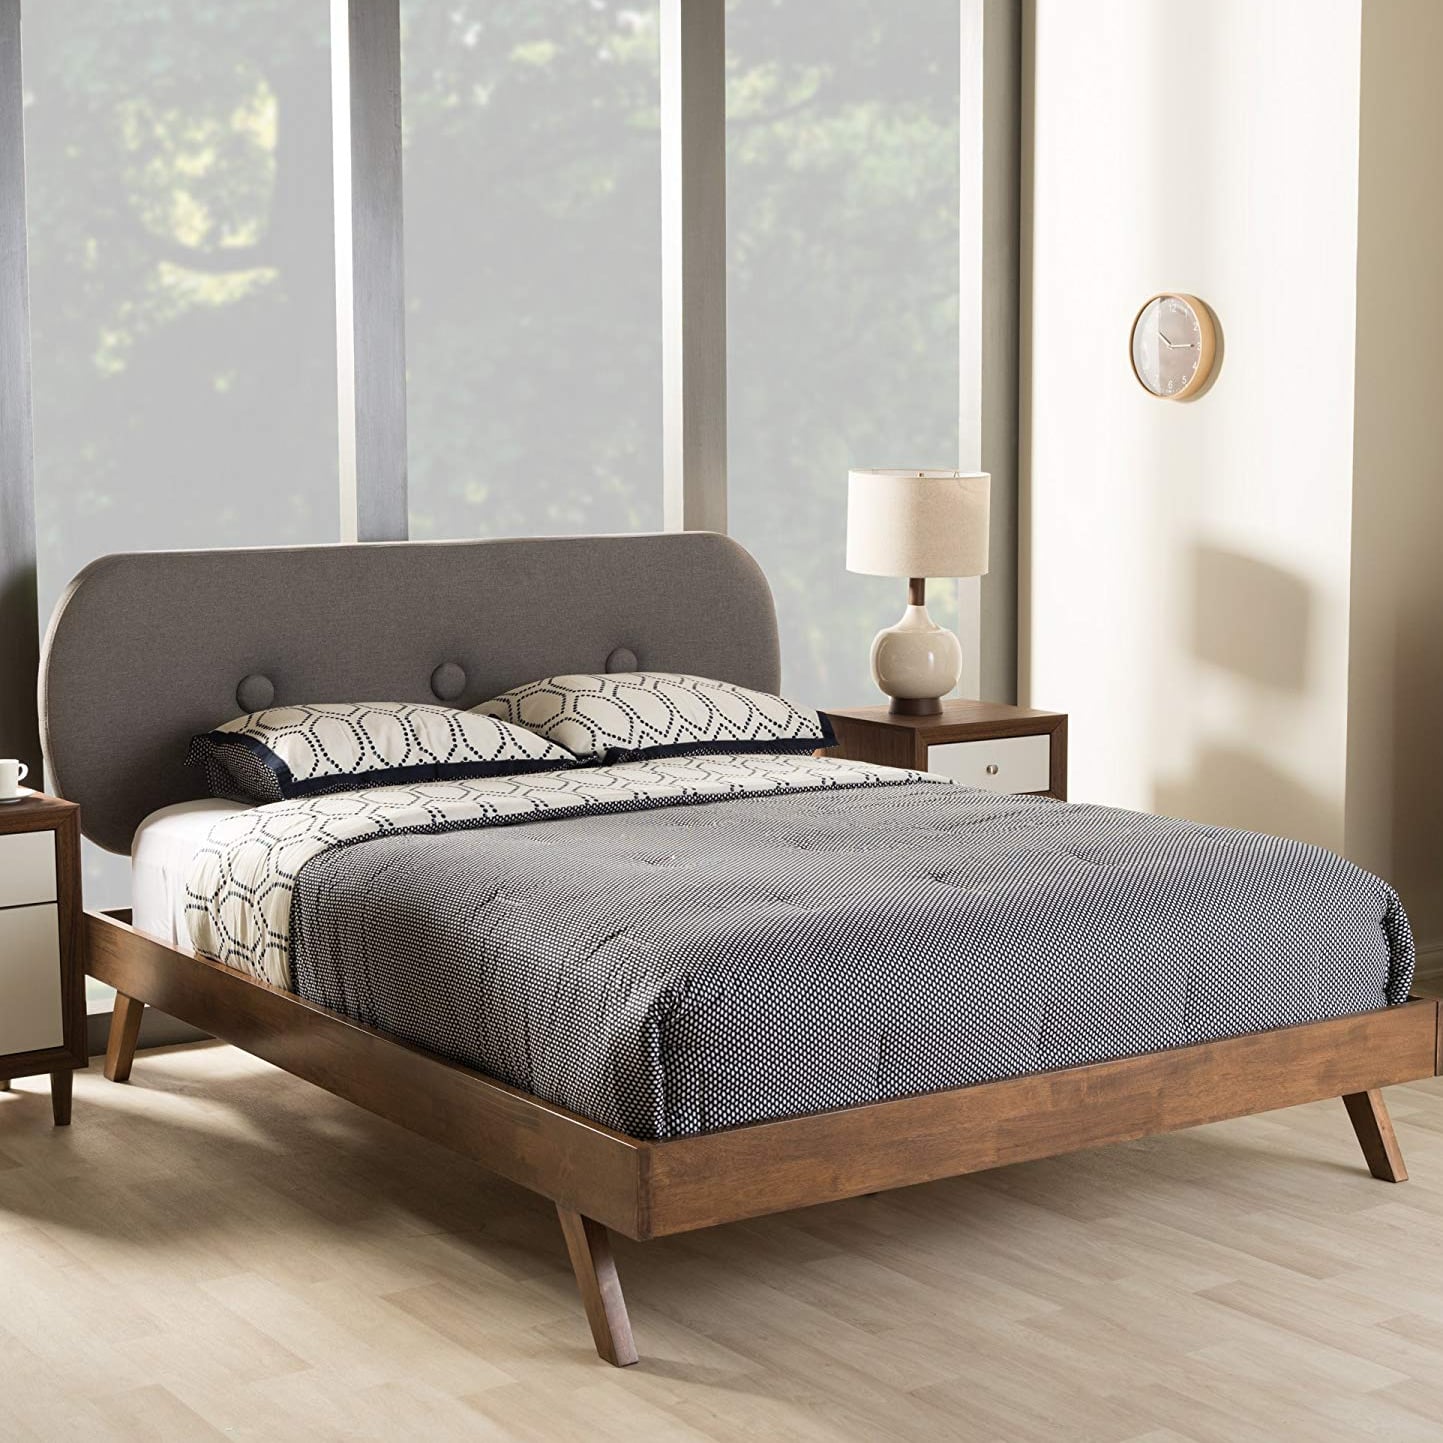 Best Bedroom Furniture From Amazon Popsugar Home Australia